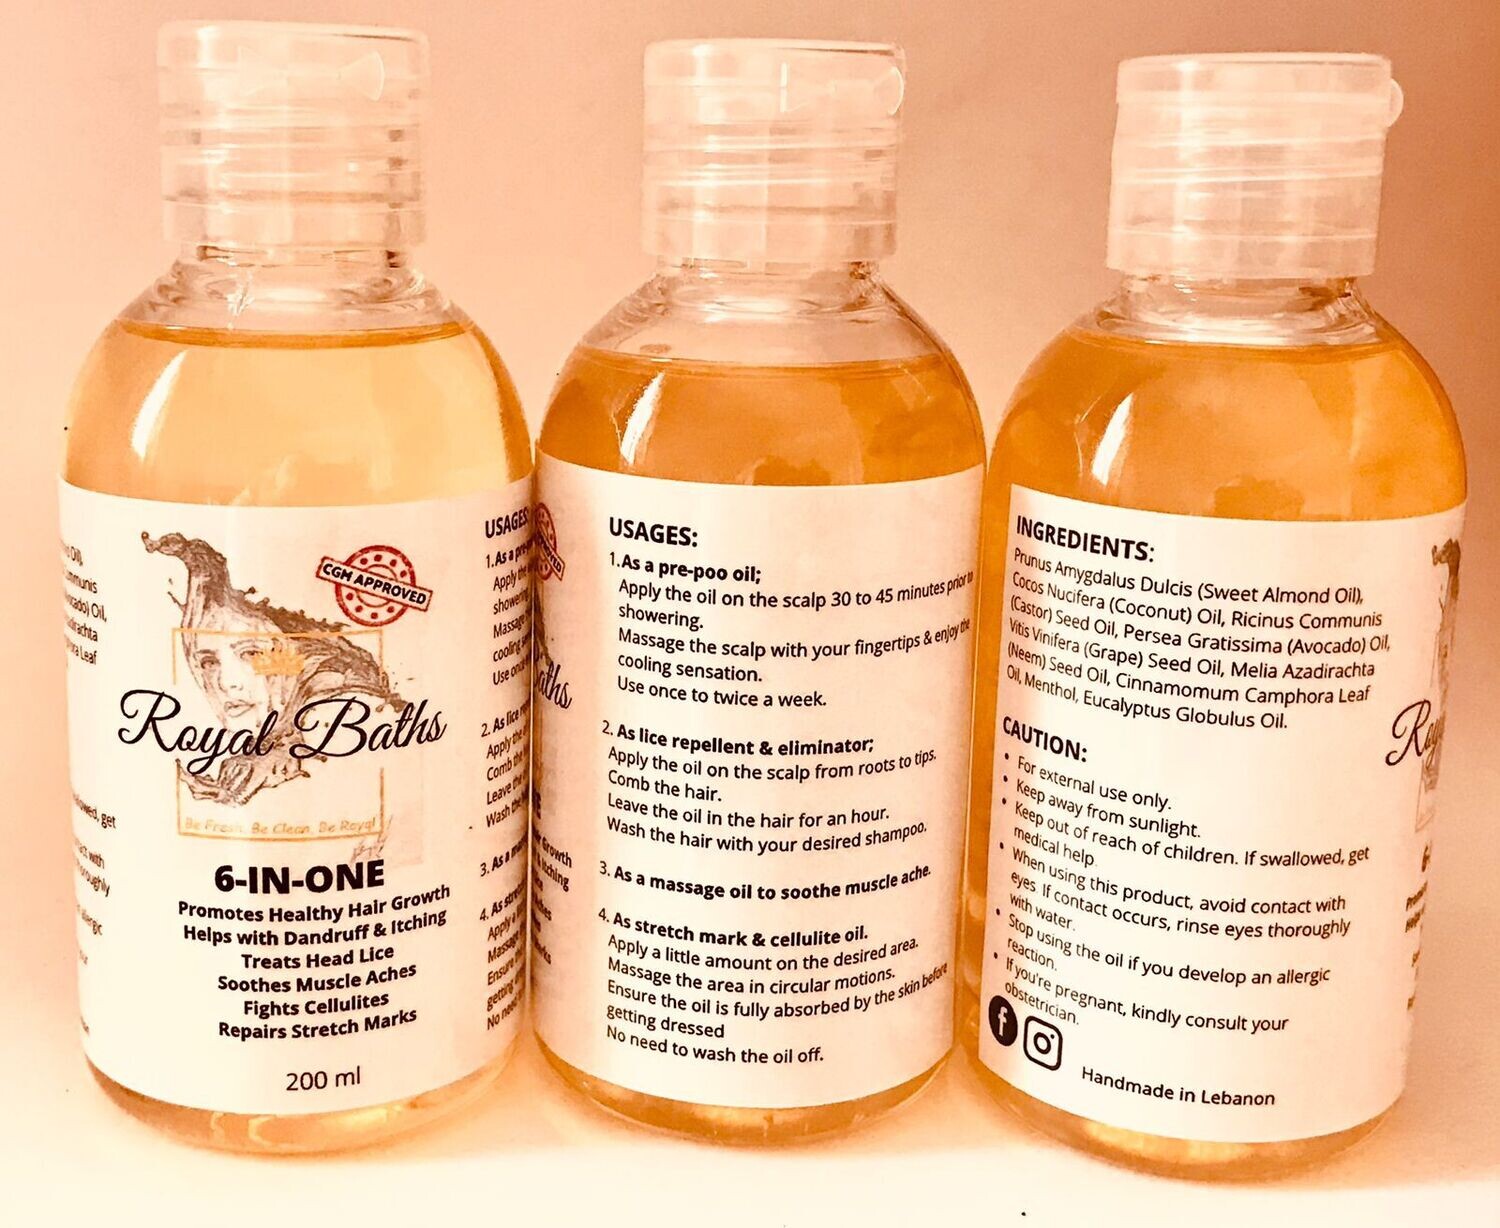 Royal baths 6 in 1 Oil